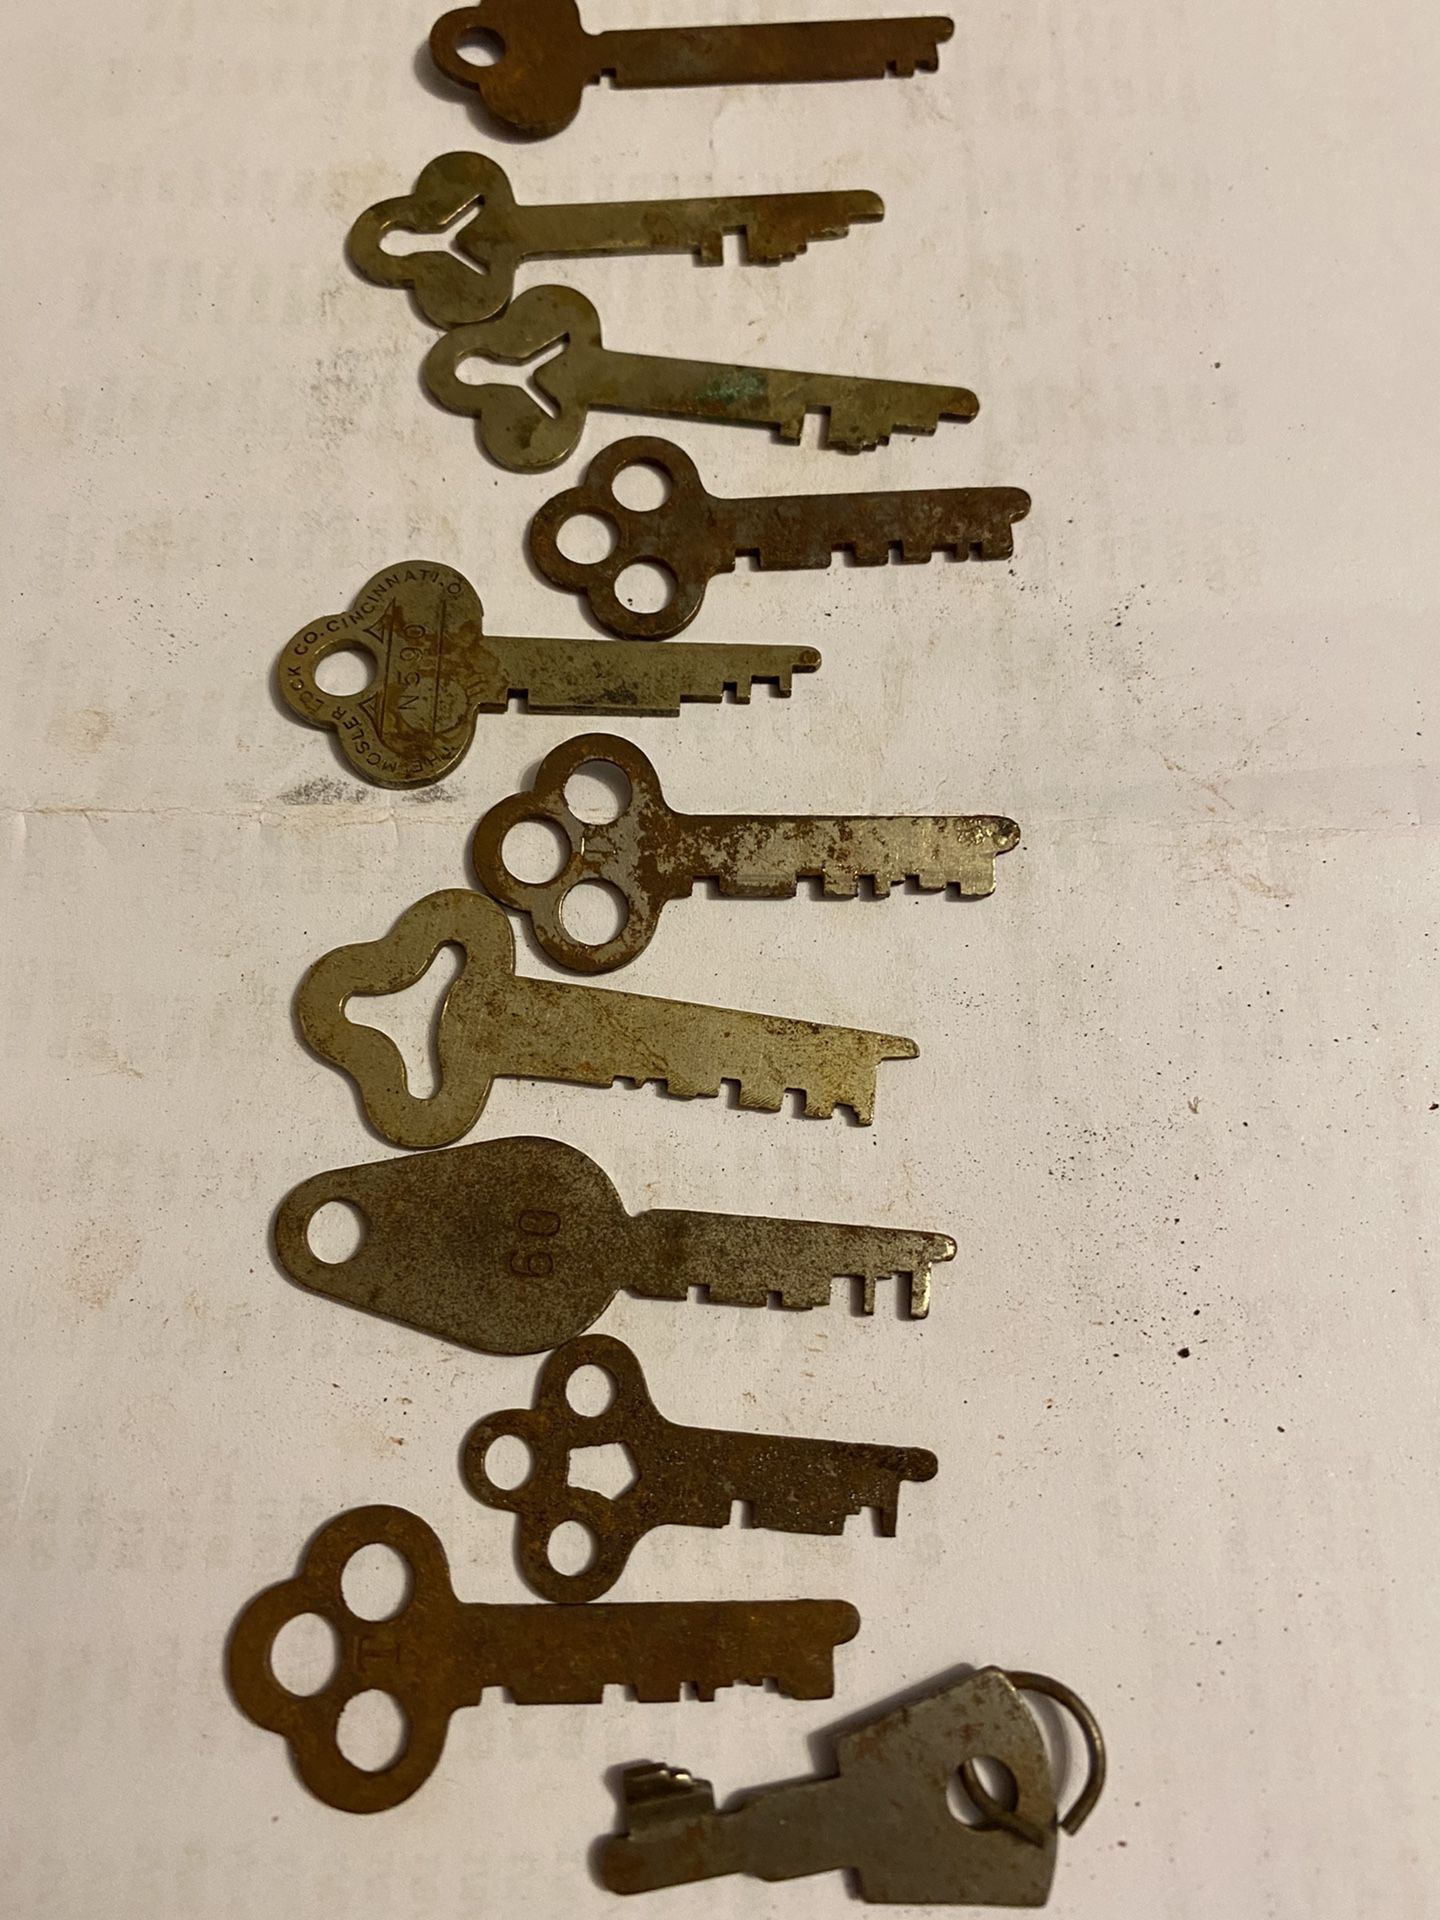 Lot of 10 flat keys 2” long